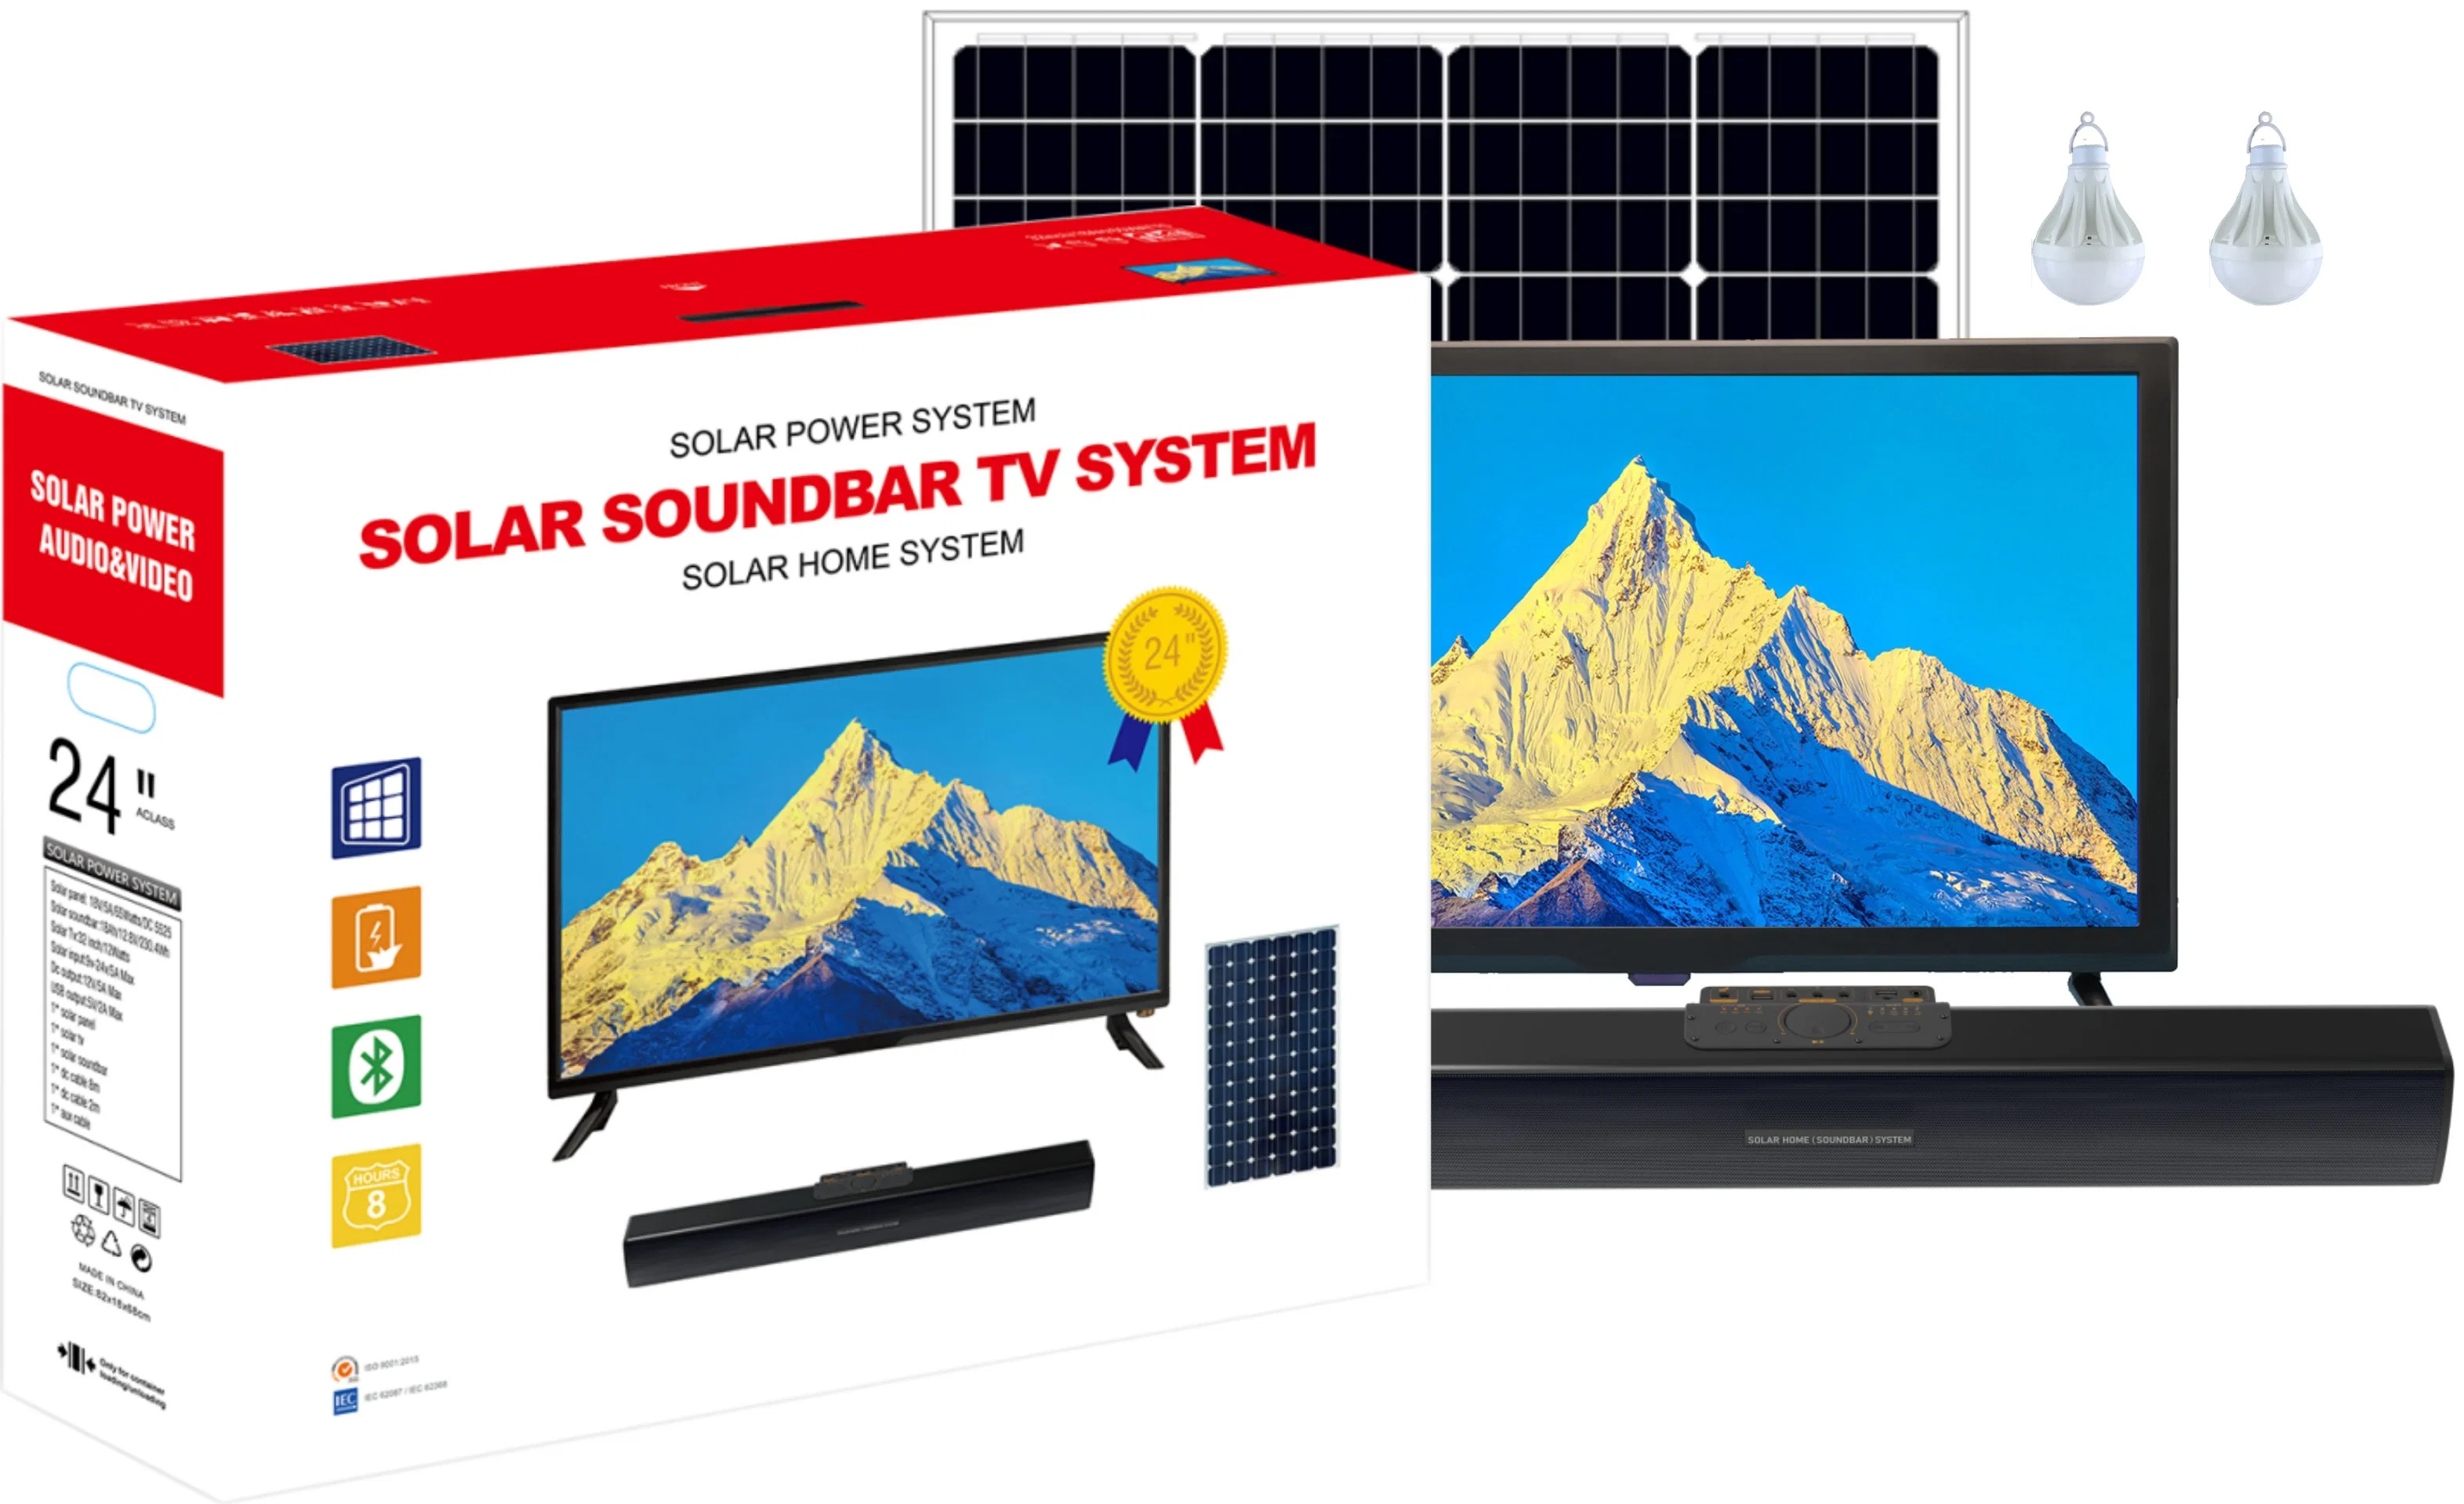 Pcv Solar Energy Storage System Solar Soundbar TV System with 12.8V 22ah Solar Energy Storage Soundbar Support Bluetooth Portable for Outdoor